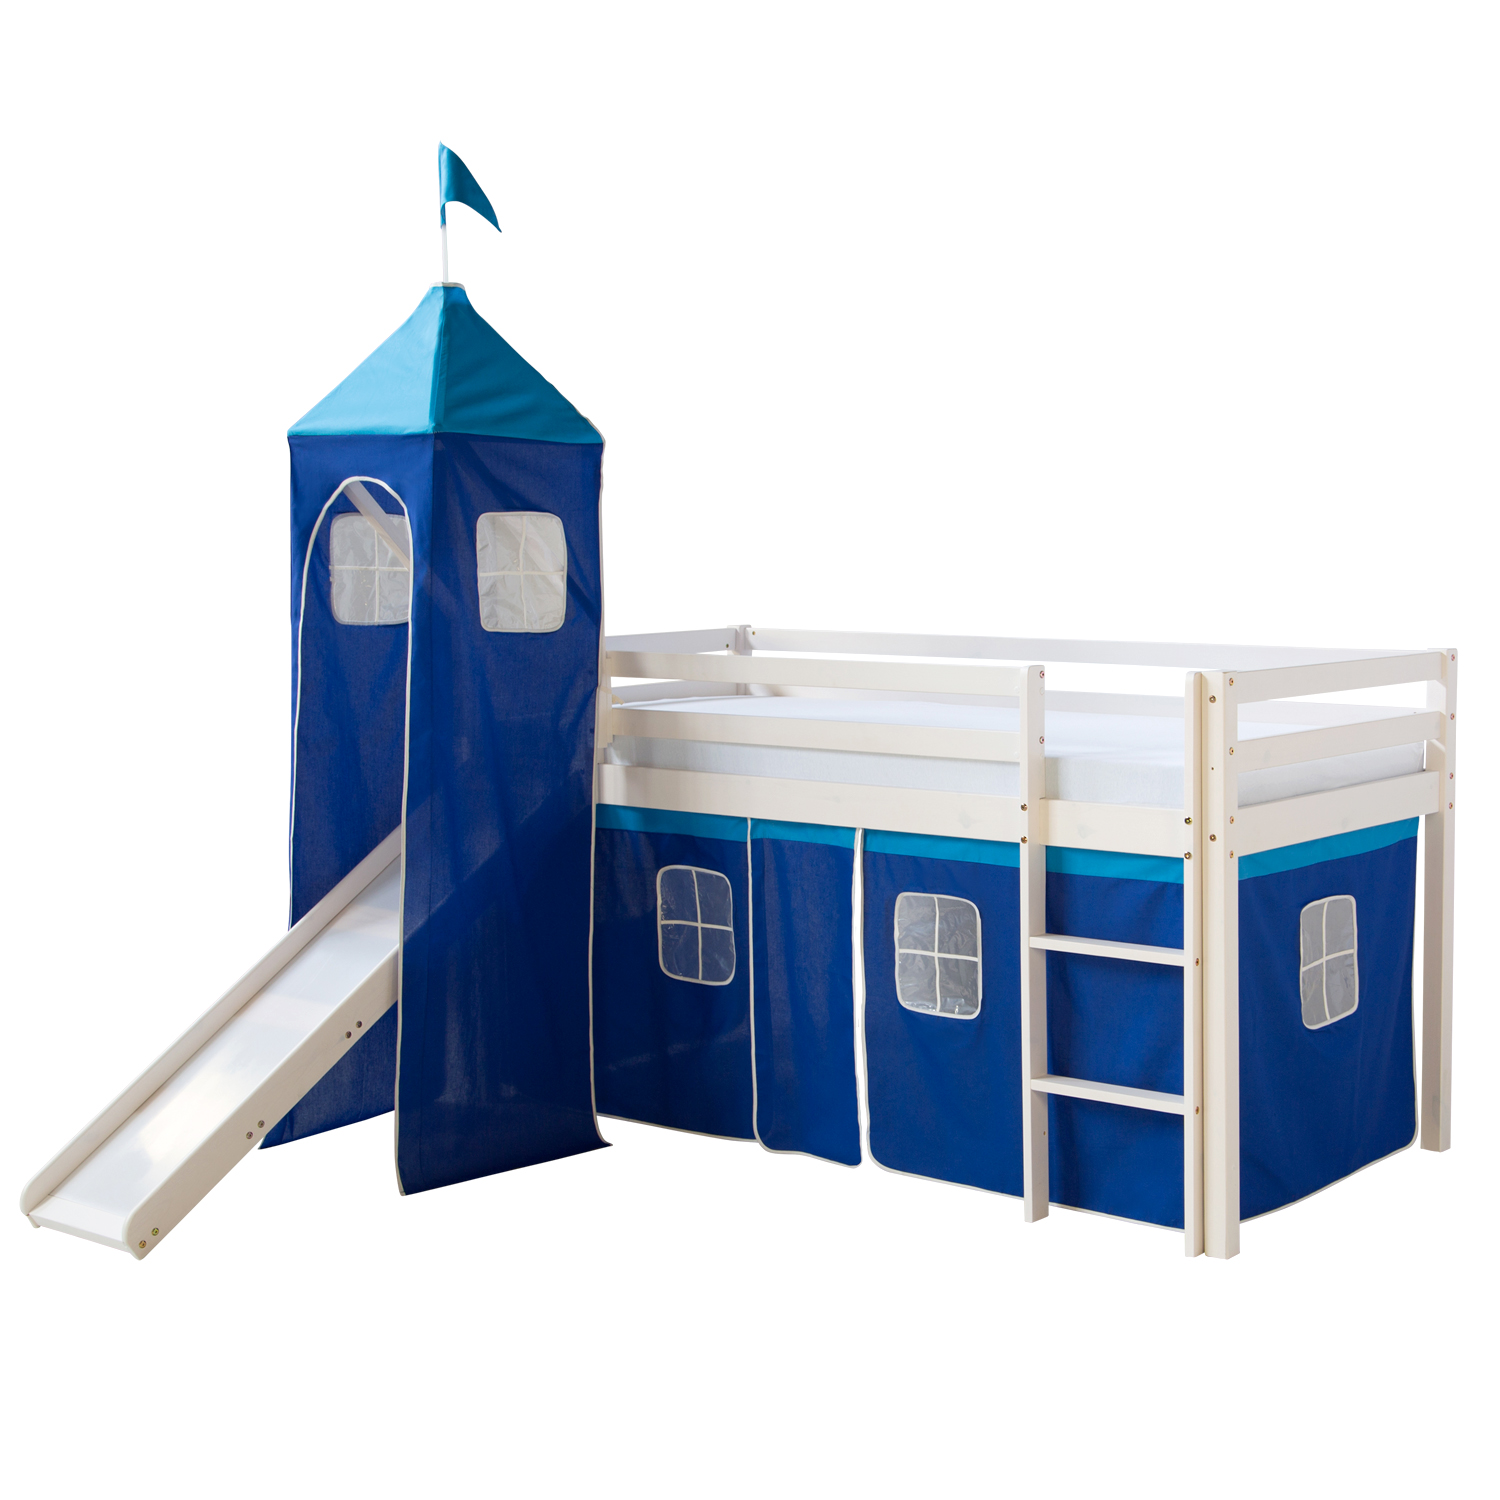 Children bunk bed loft cabin bed solid pine white blue curtain slide tower